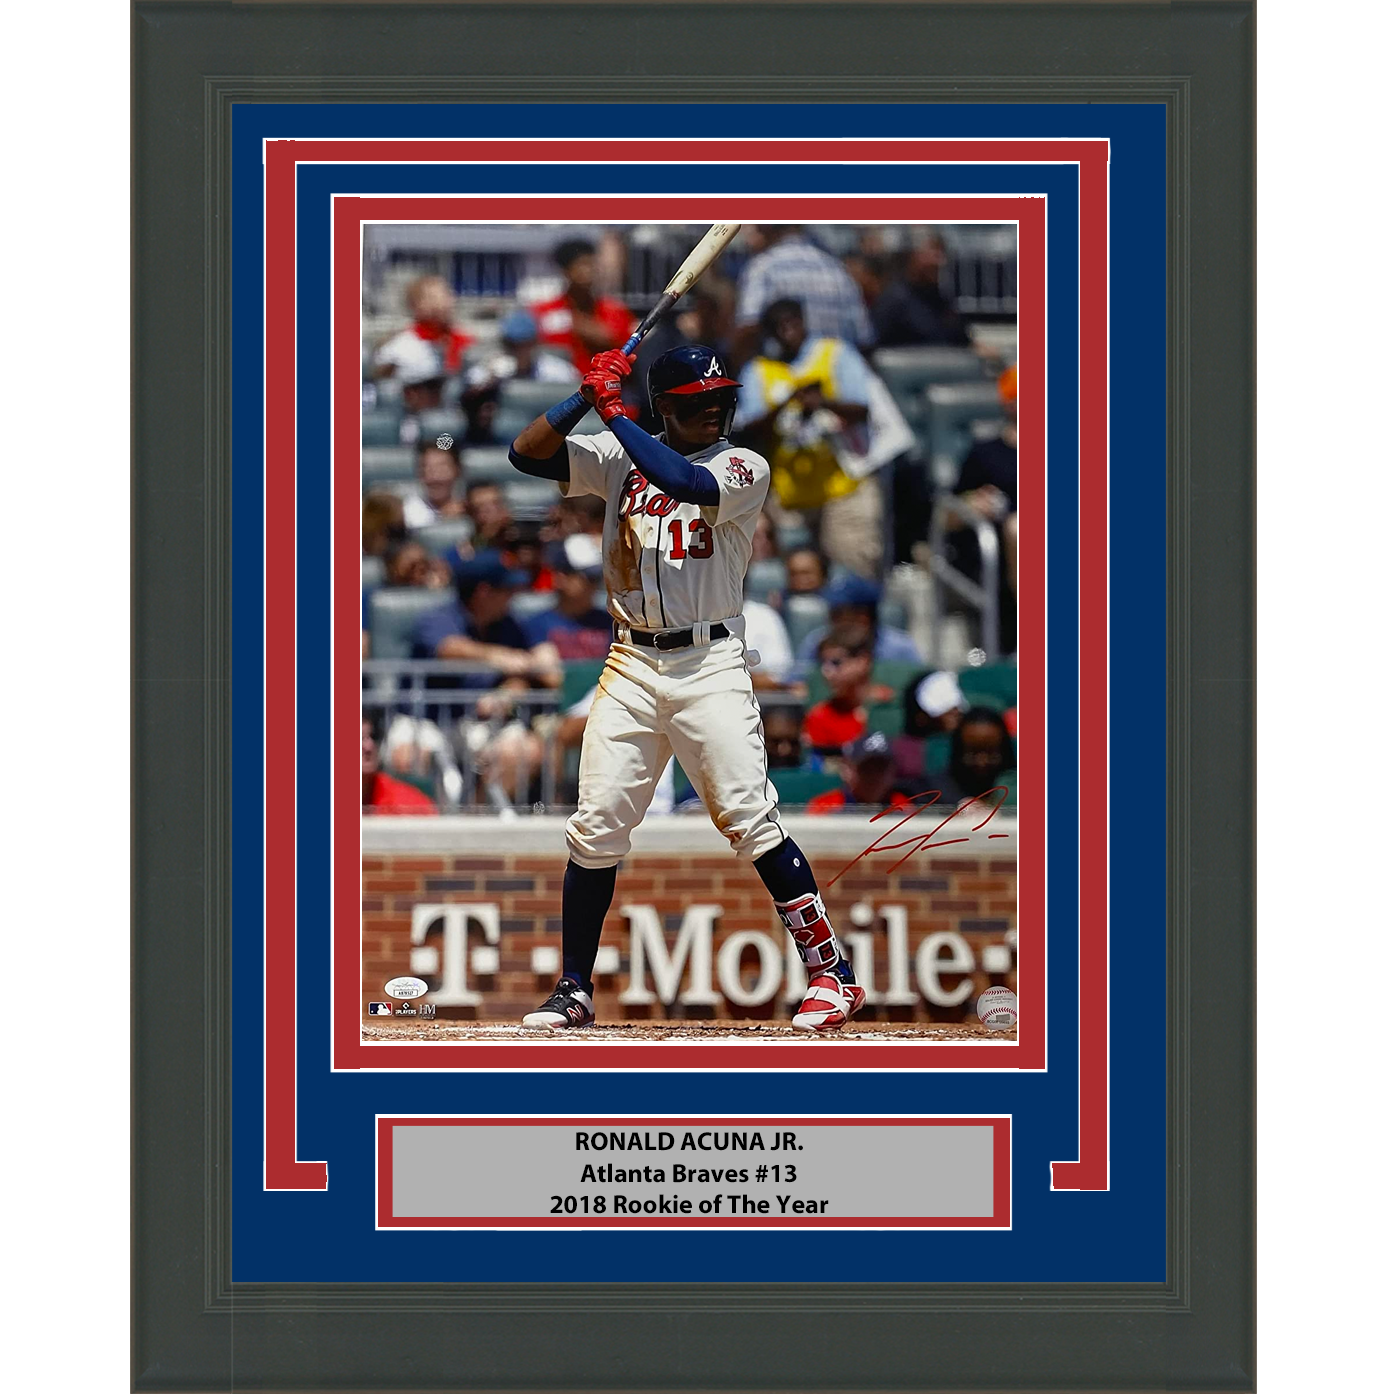 Framed Autographed/Signed Ronald Acuna Jr. Atlanta Braves 16x20 Baseball  Photo JSA COA #9 - Hall of Fame Sports Memorabilia